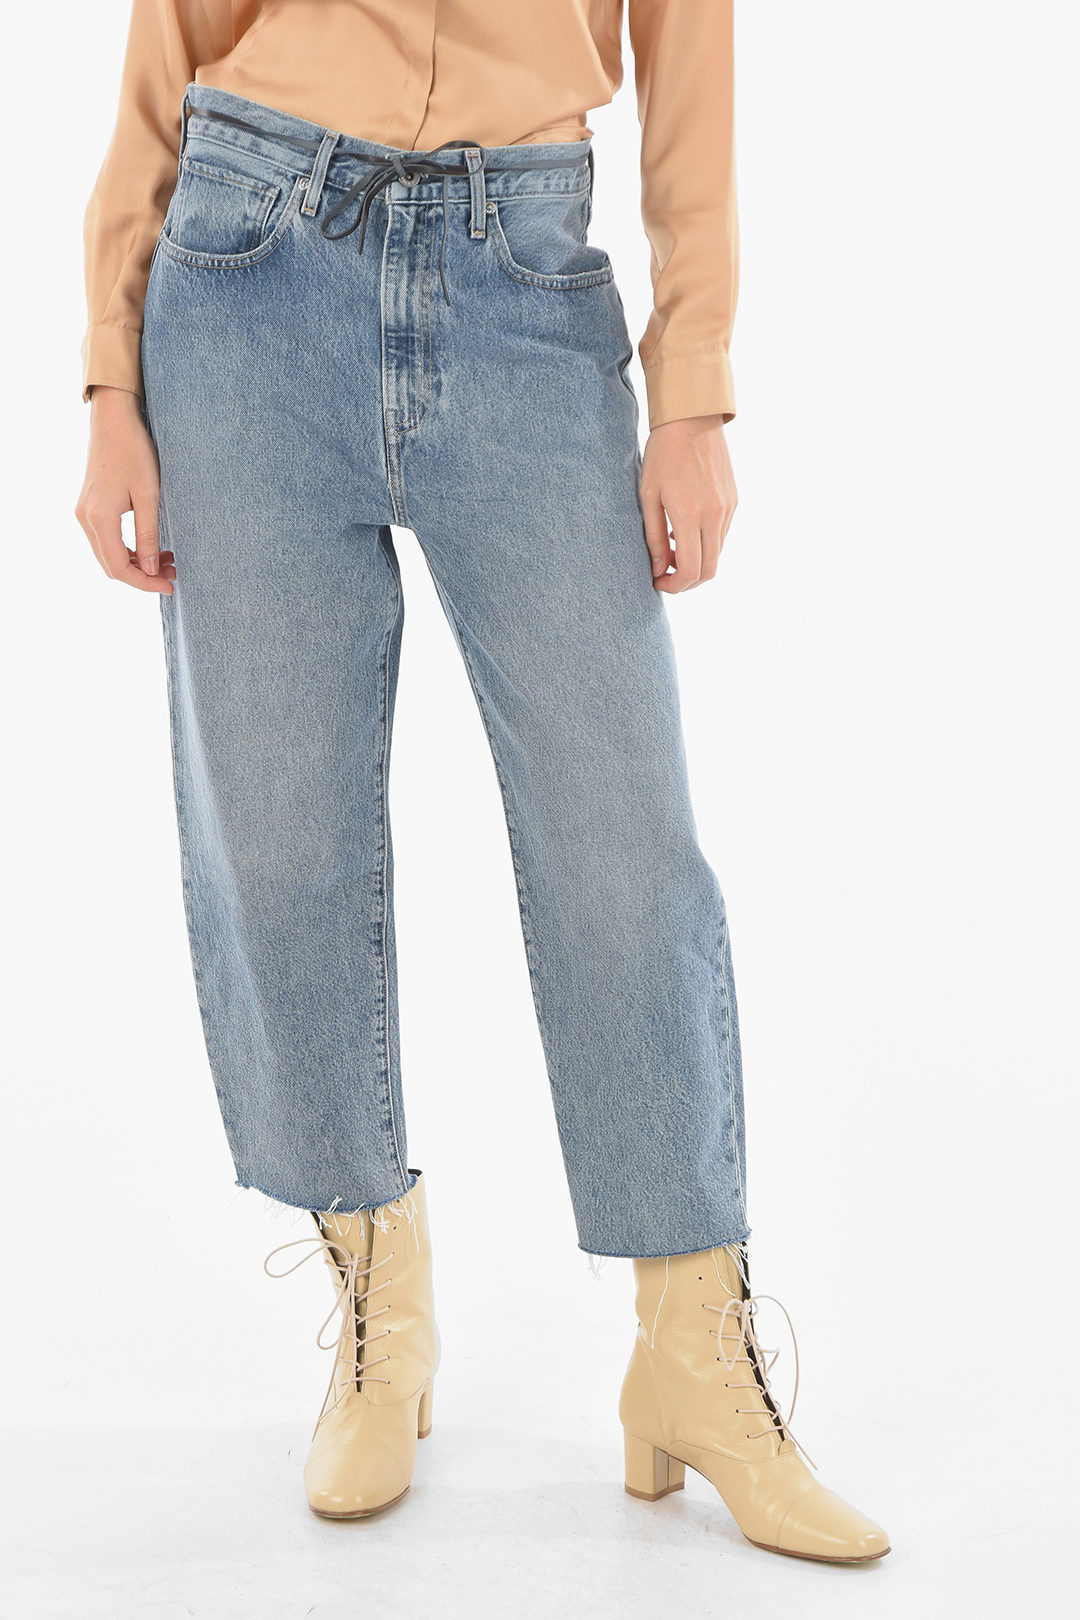 Levi's Jeans BARREL CROP with Leather Skinny Belt women - Glamood Outlet